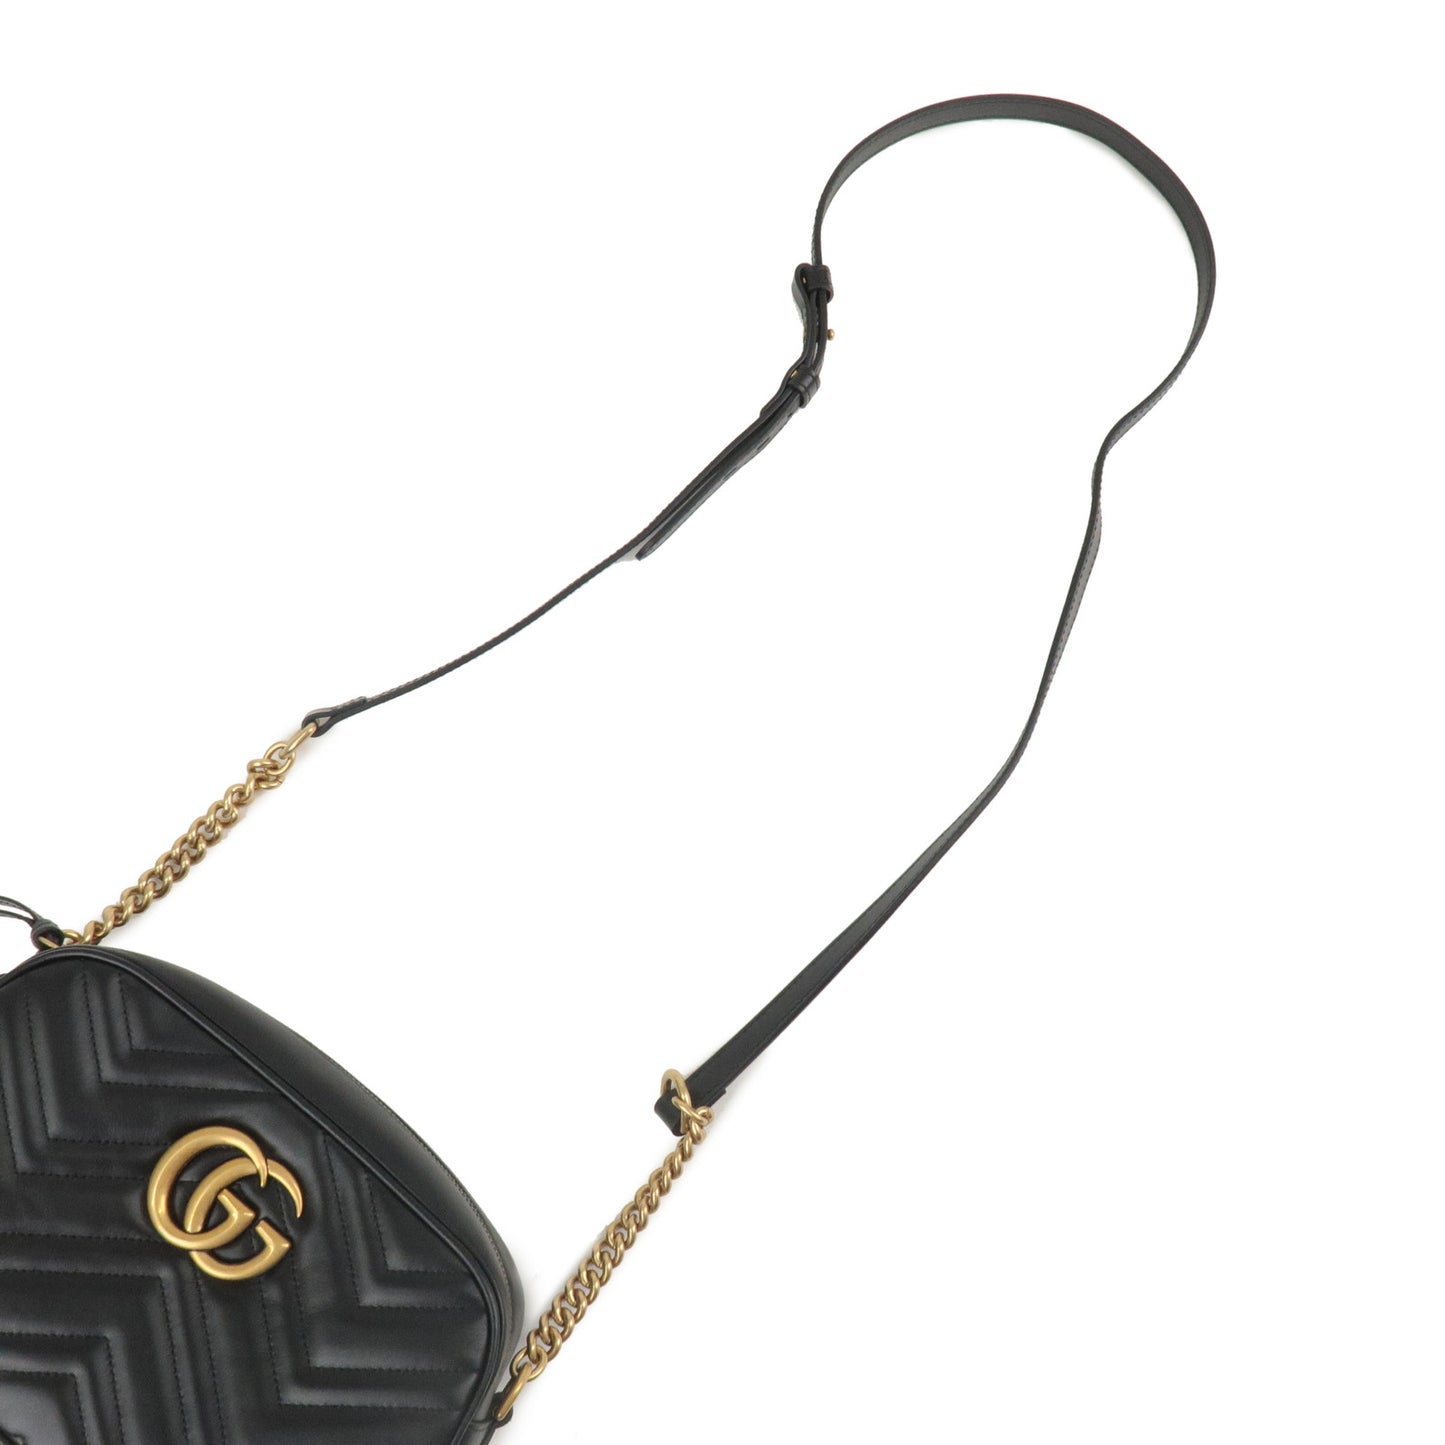 GUCCI GG Marmont Leather Chain Shoulder Bag Black 447632